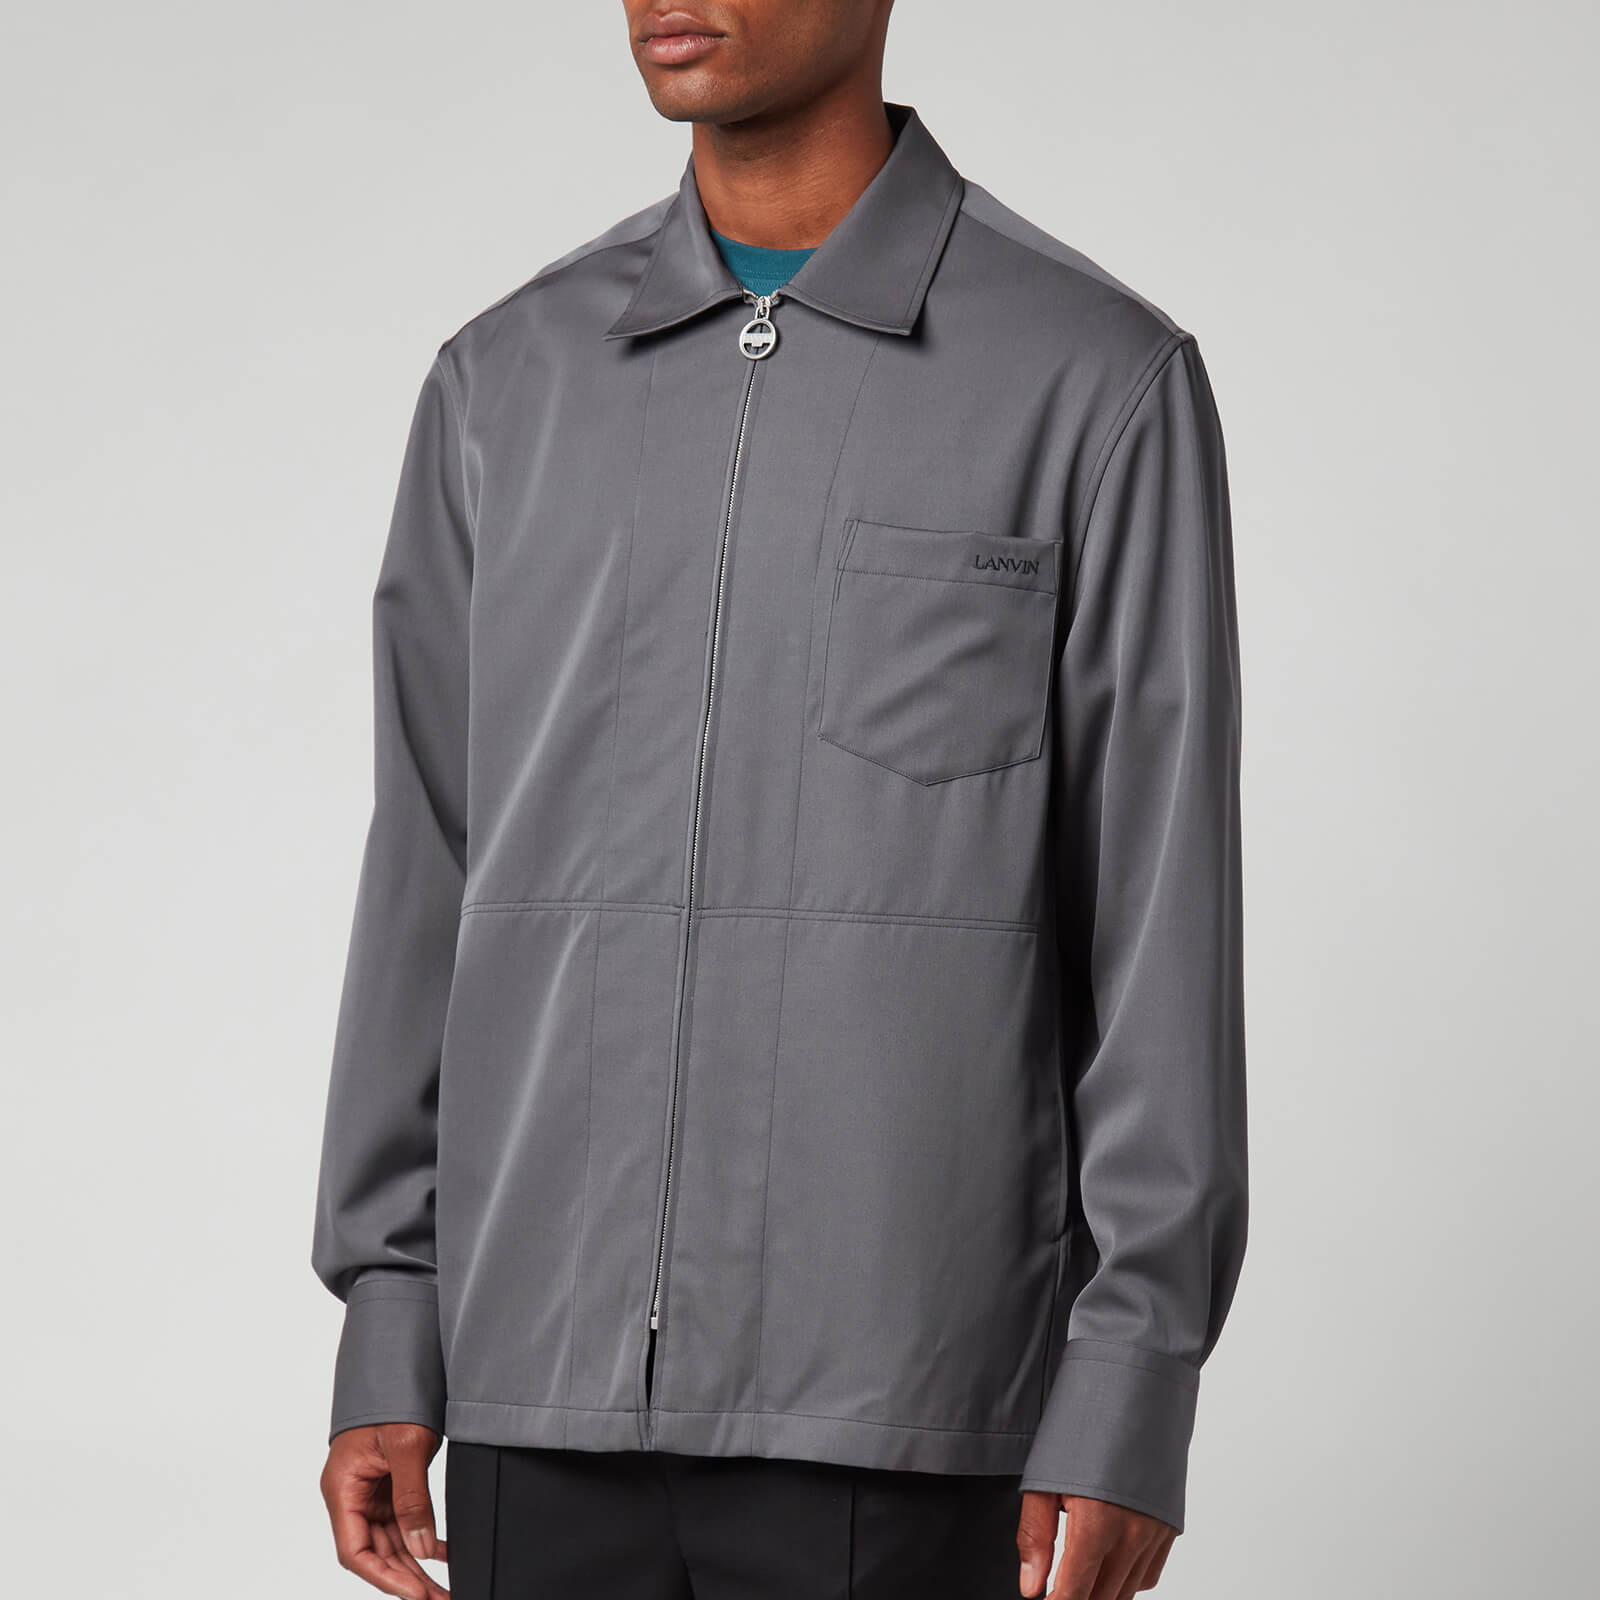 Lanvin Men's Zipped Shirt - Elephant Grey - 40/16inch